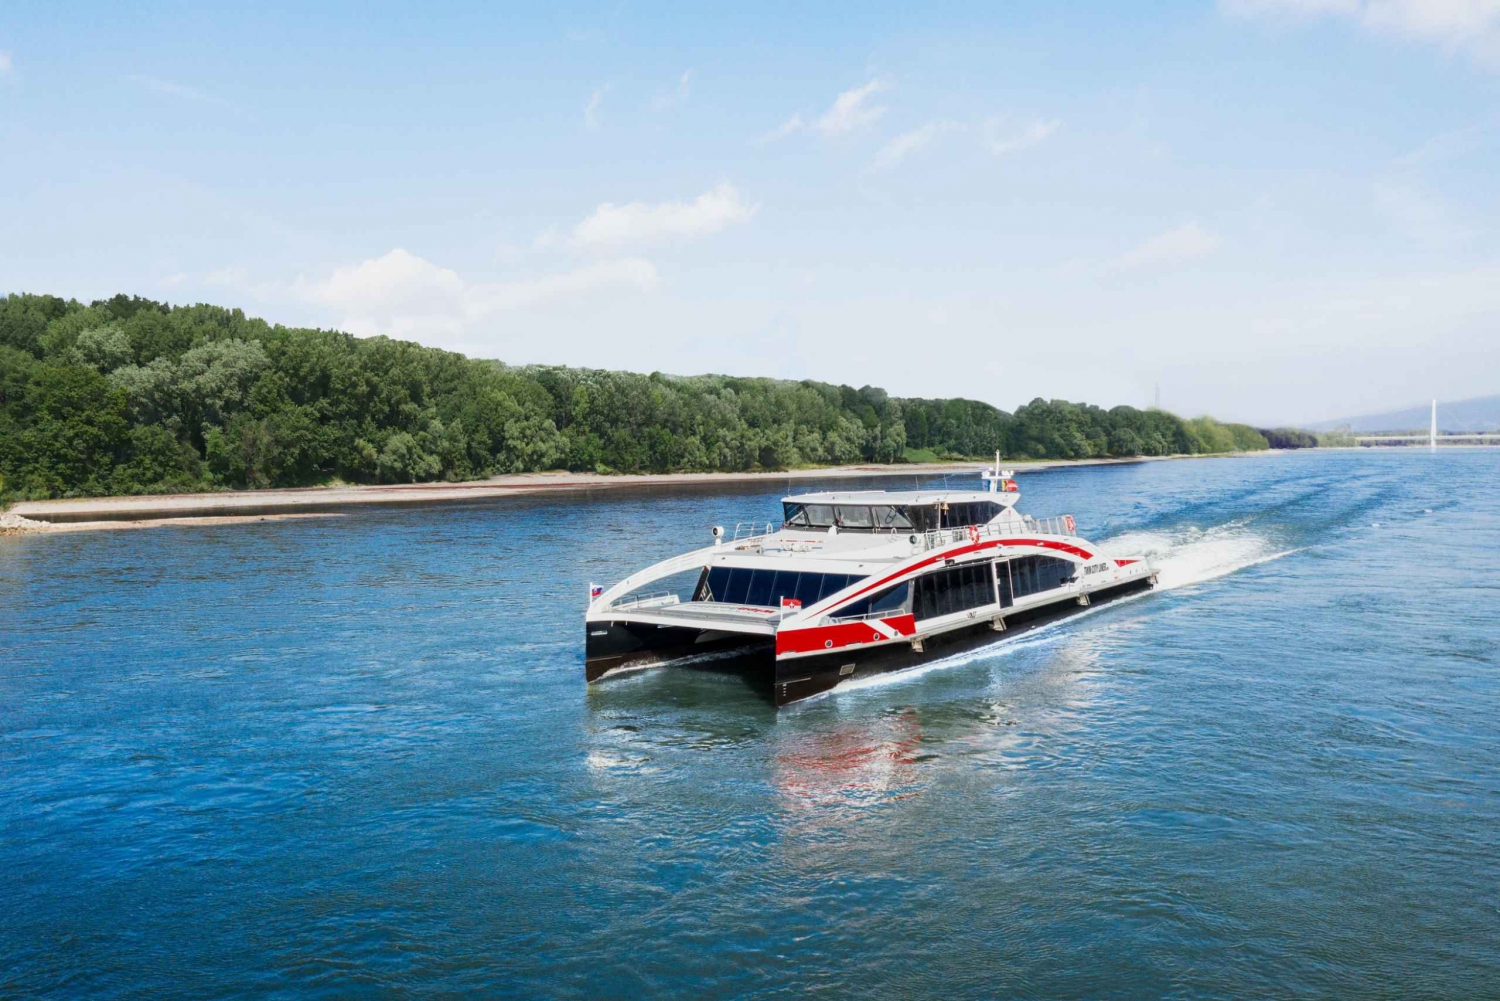 Transfer per catamaran tussen Wenen & Bratislava